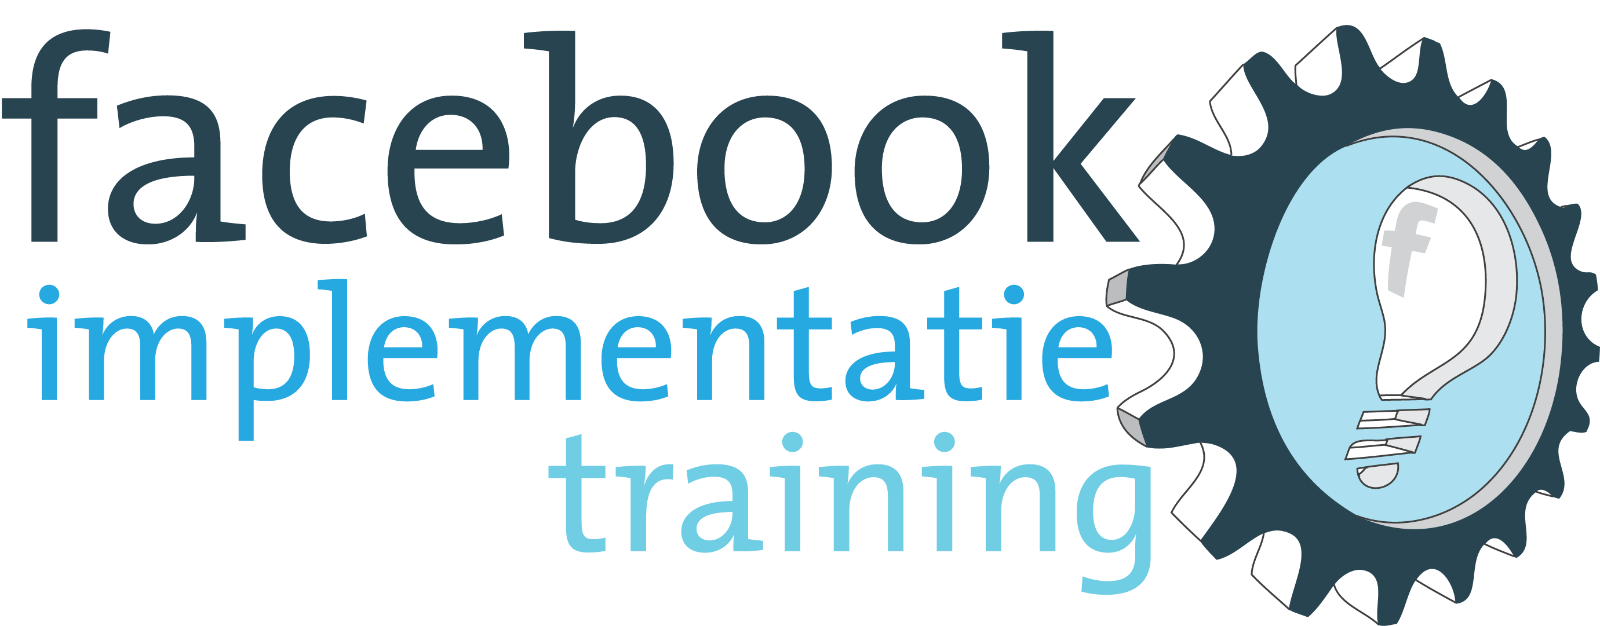 Facebook Implementatietraining 20 januari 2016 